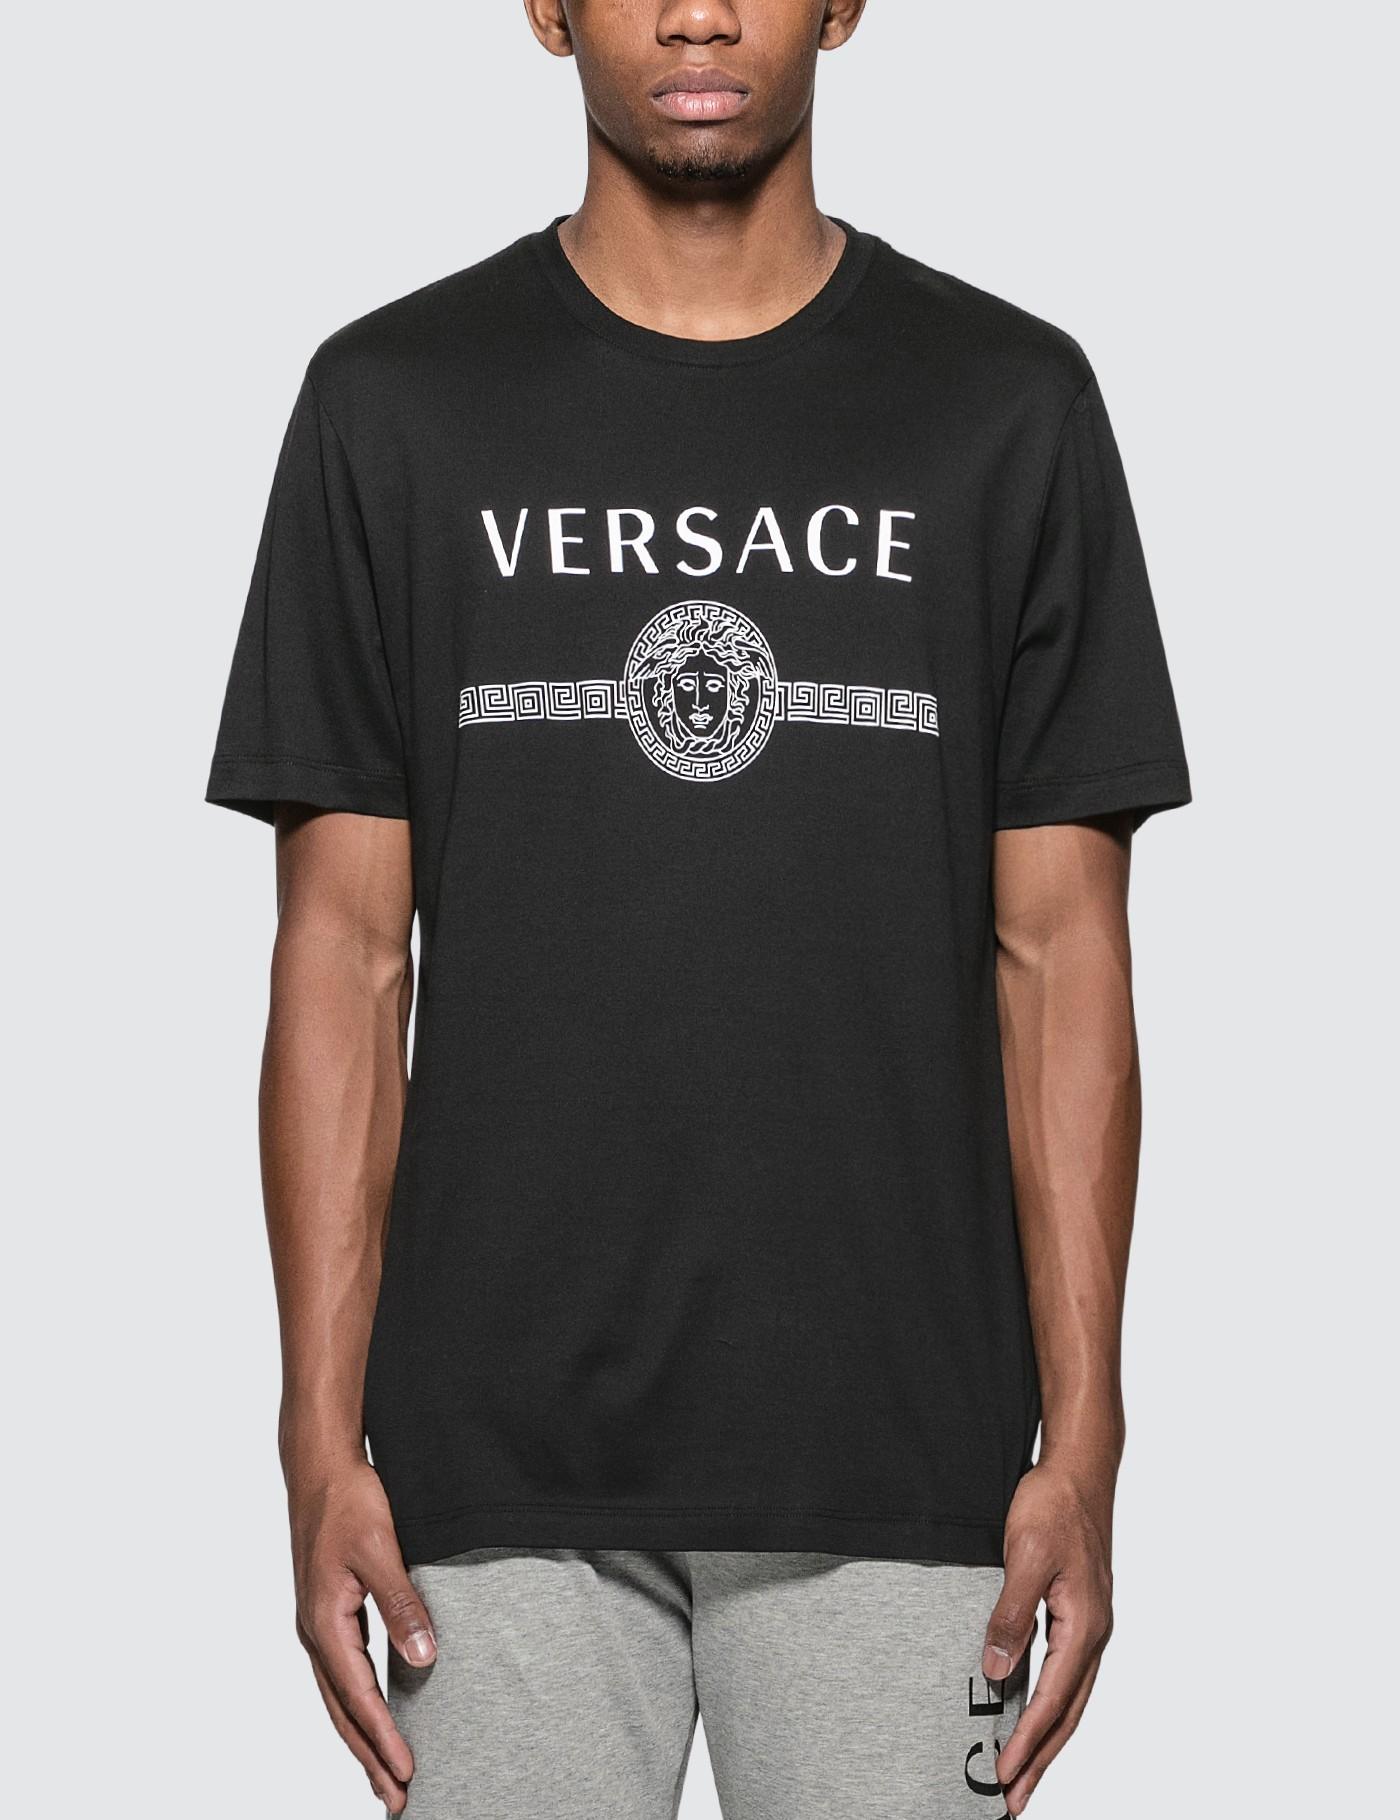 versace vintage logo t shirt